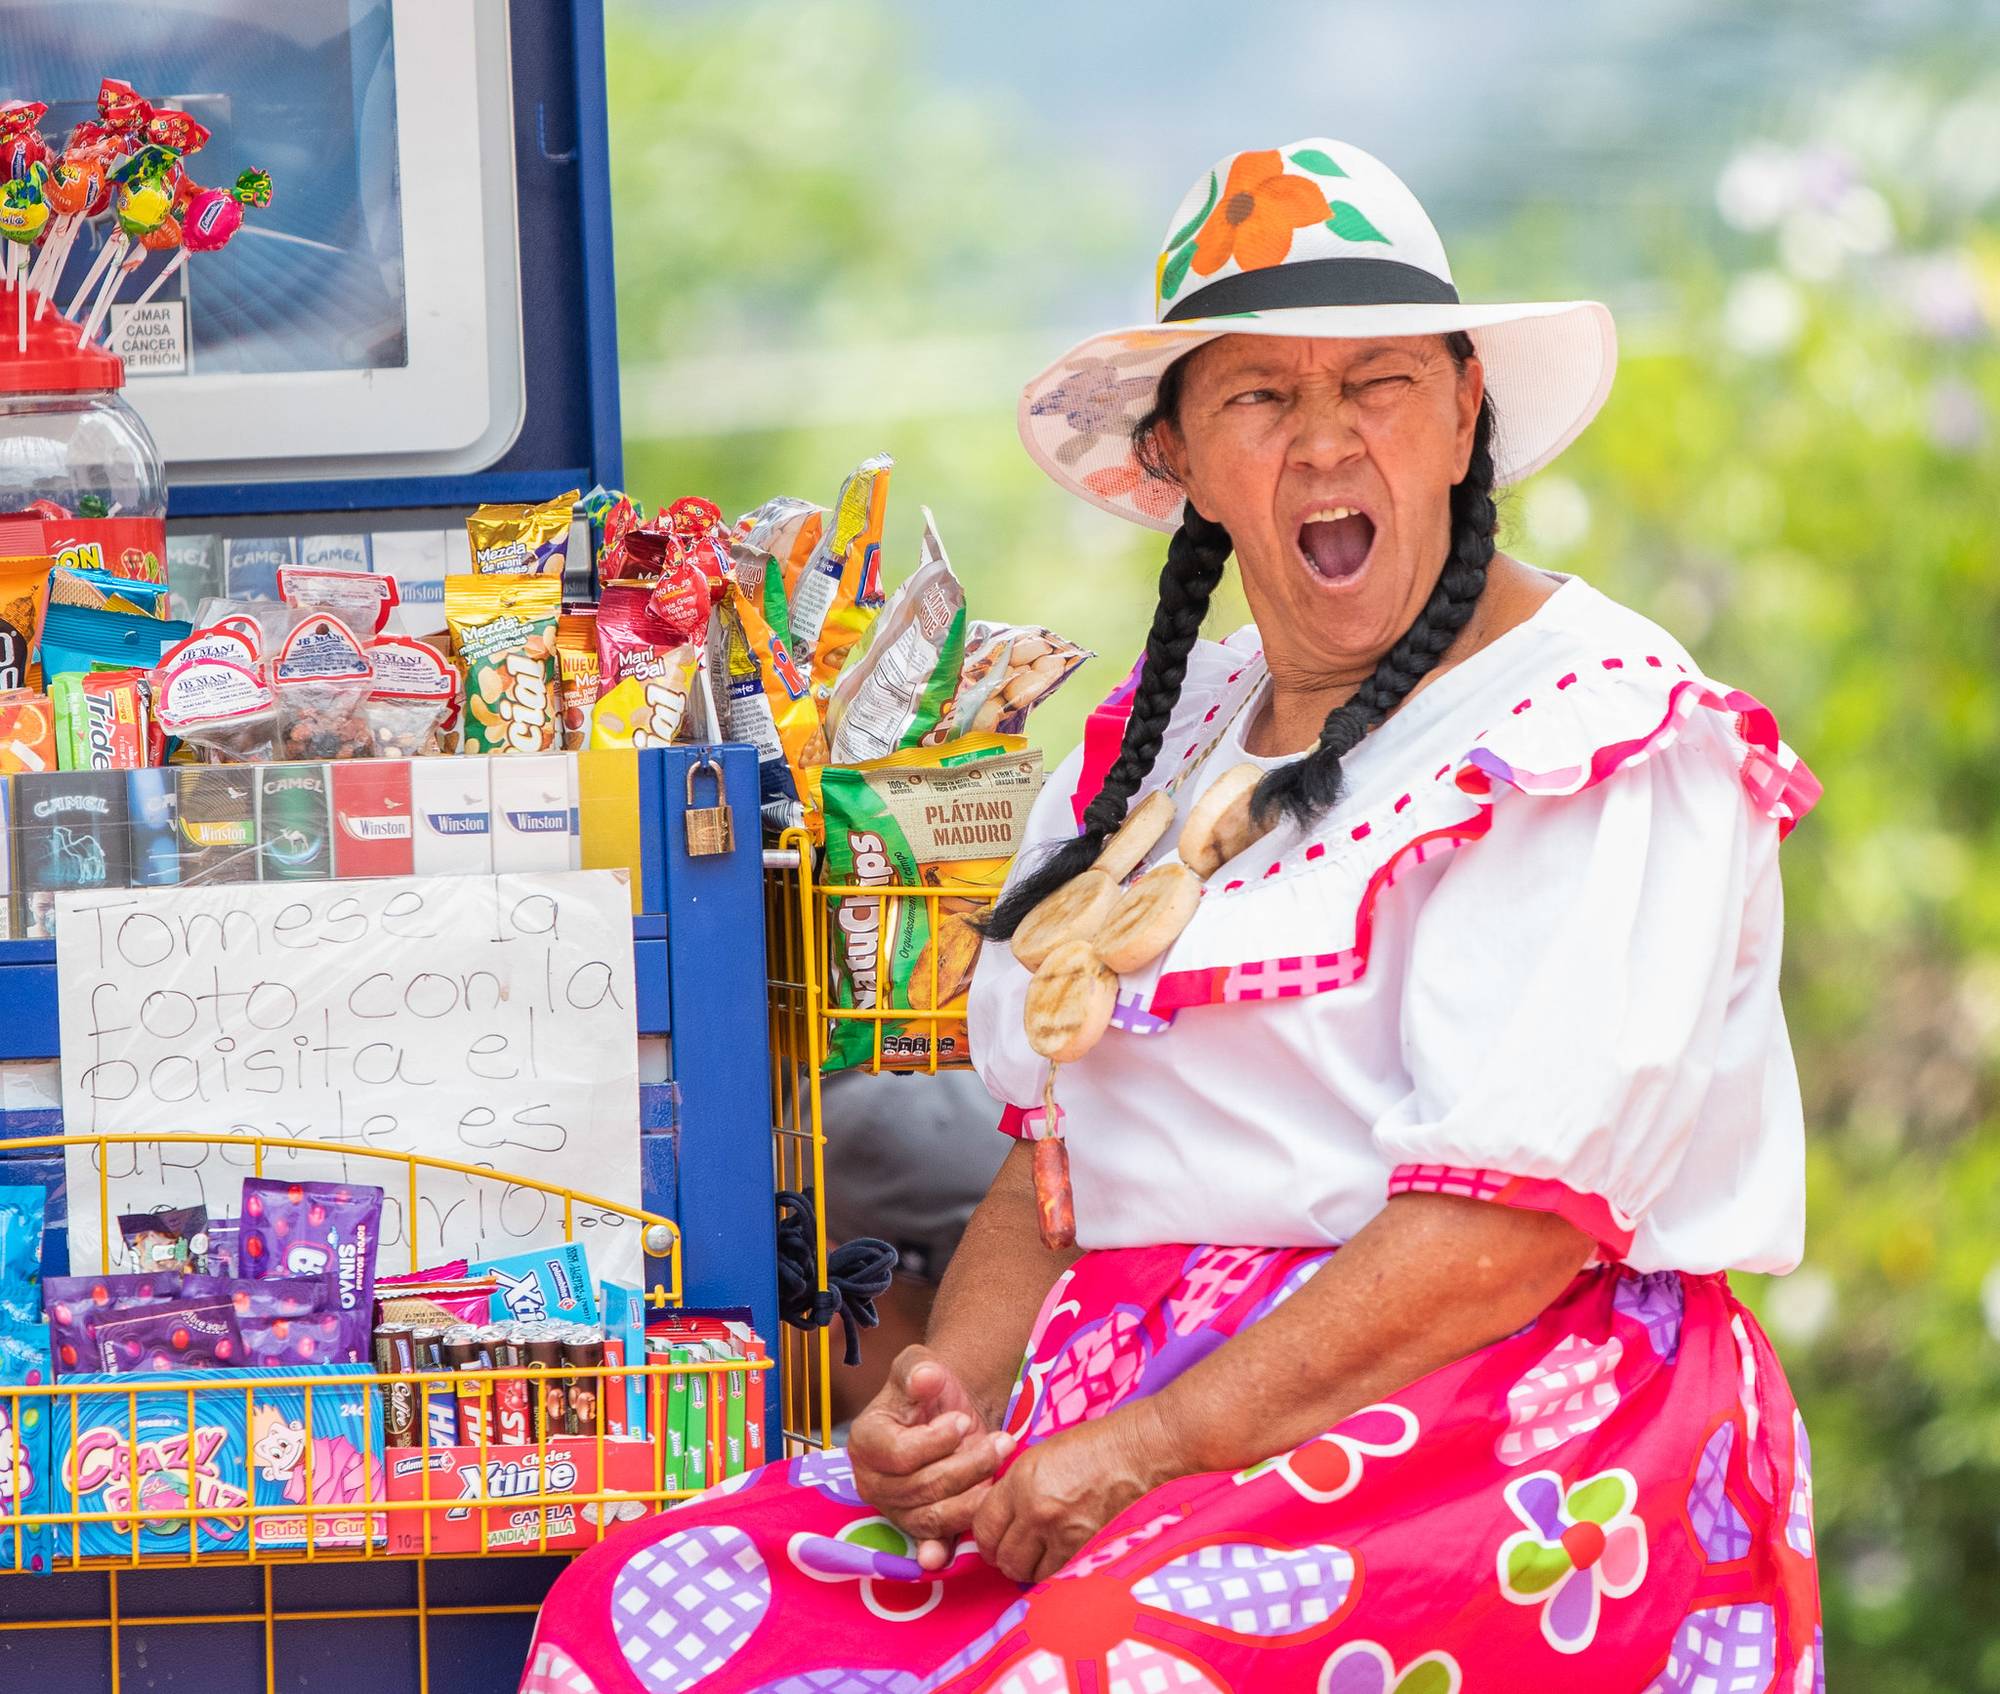 Señora wearing traditional clothing